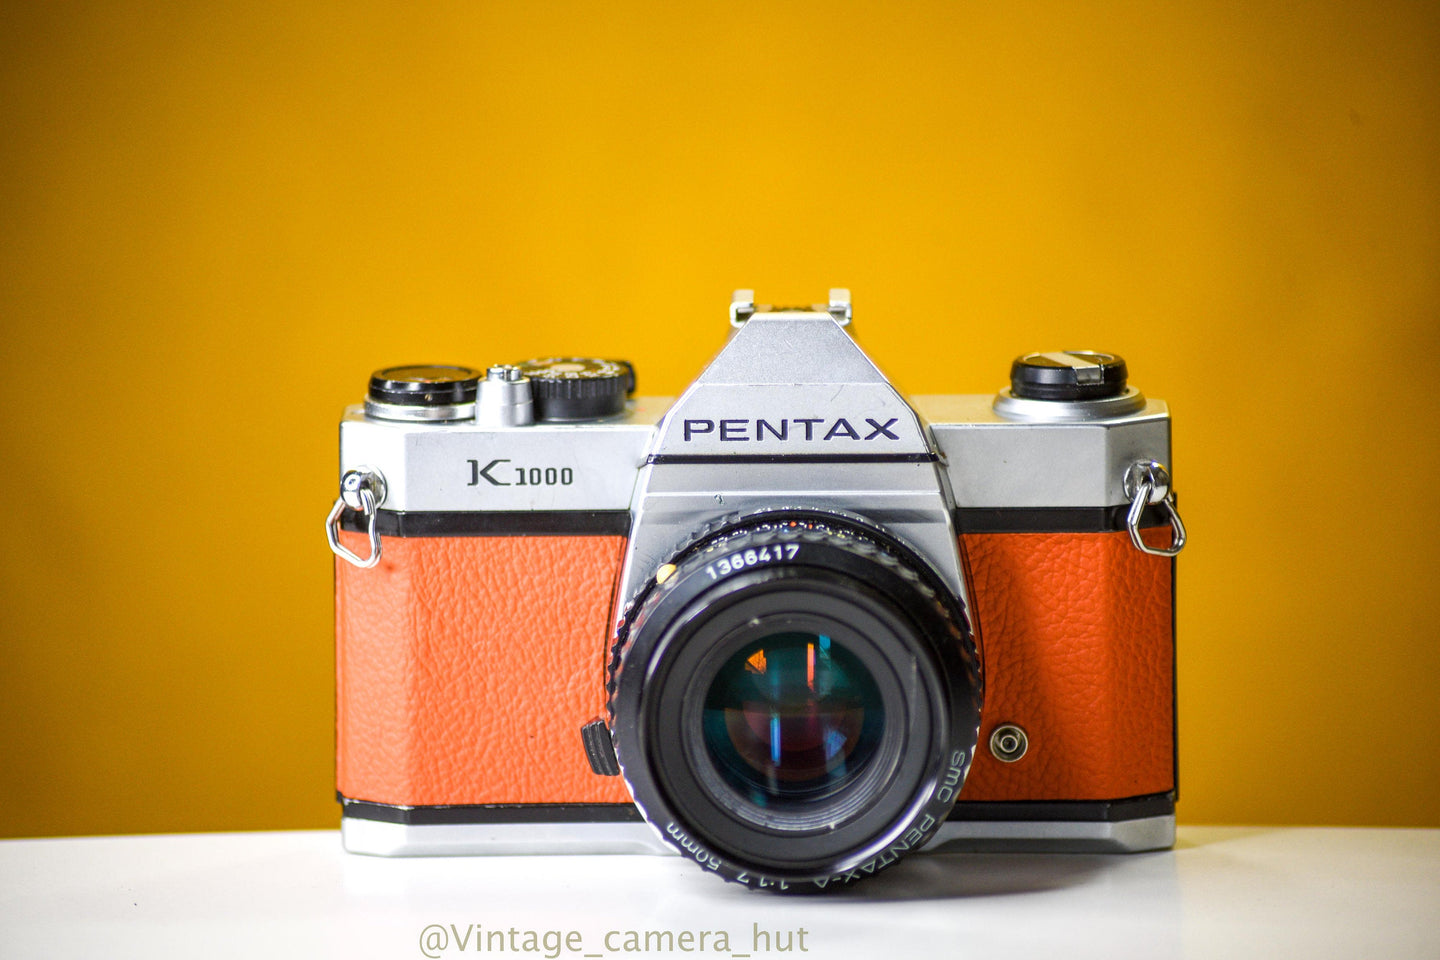 Pentax K1000 35mm Film Camera with SMC-M 50mm f/1.7 Prime Lens in Orange